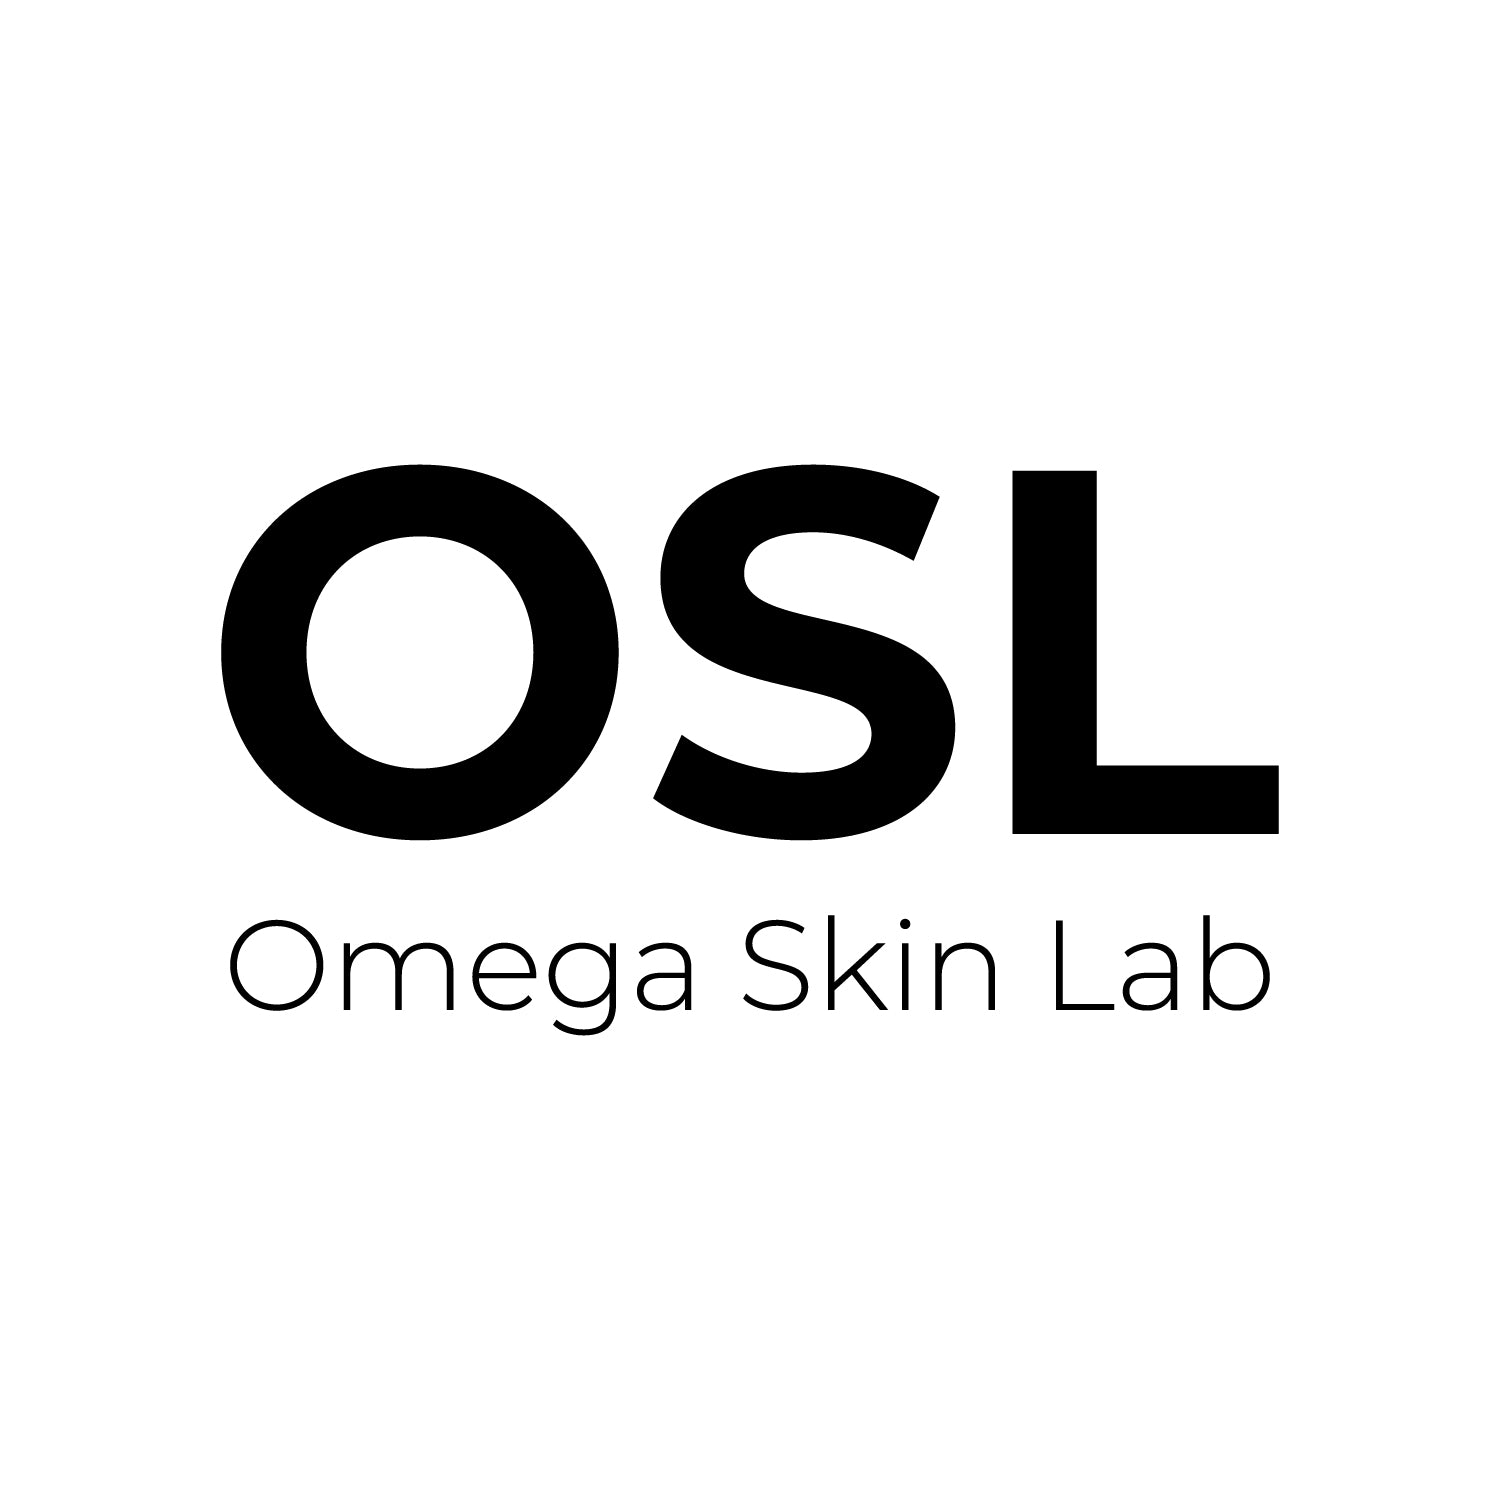 Omega Skin Lab